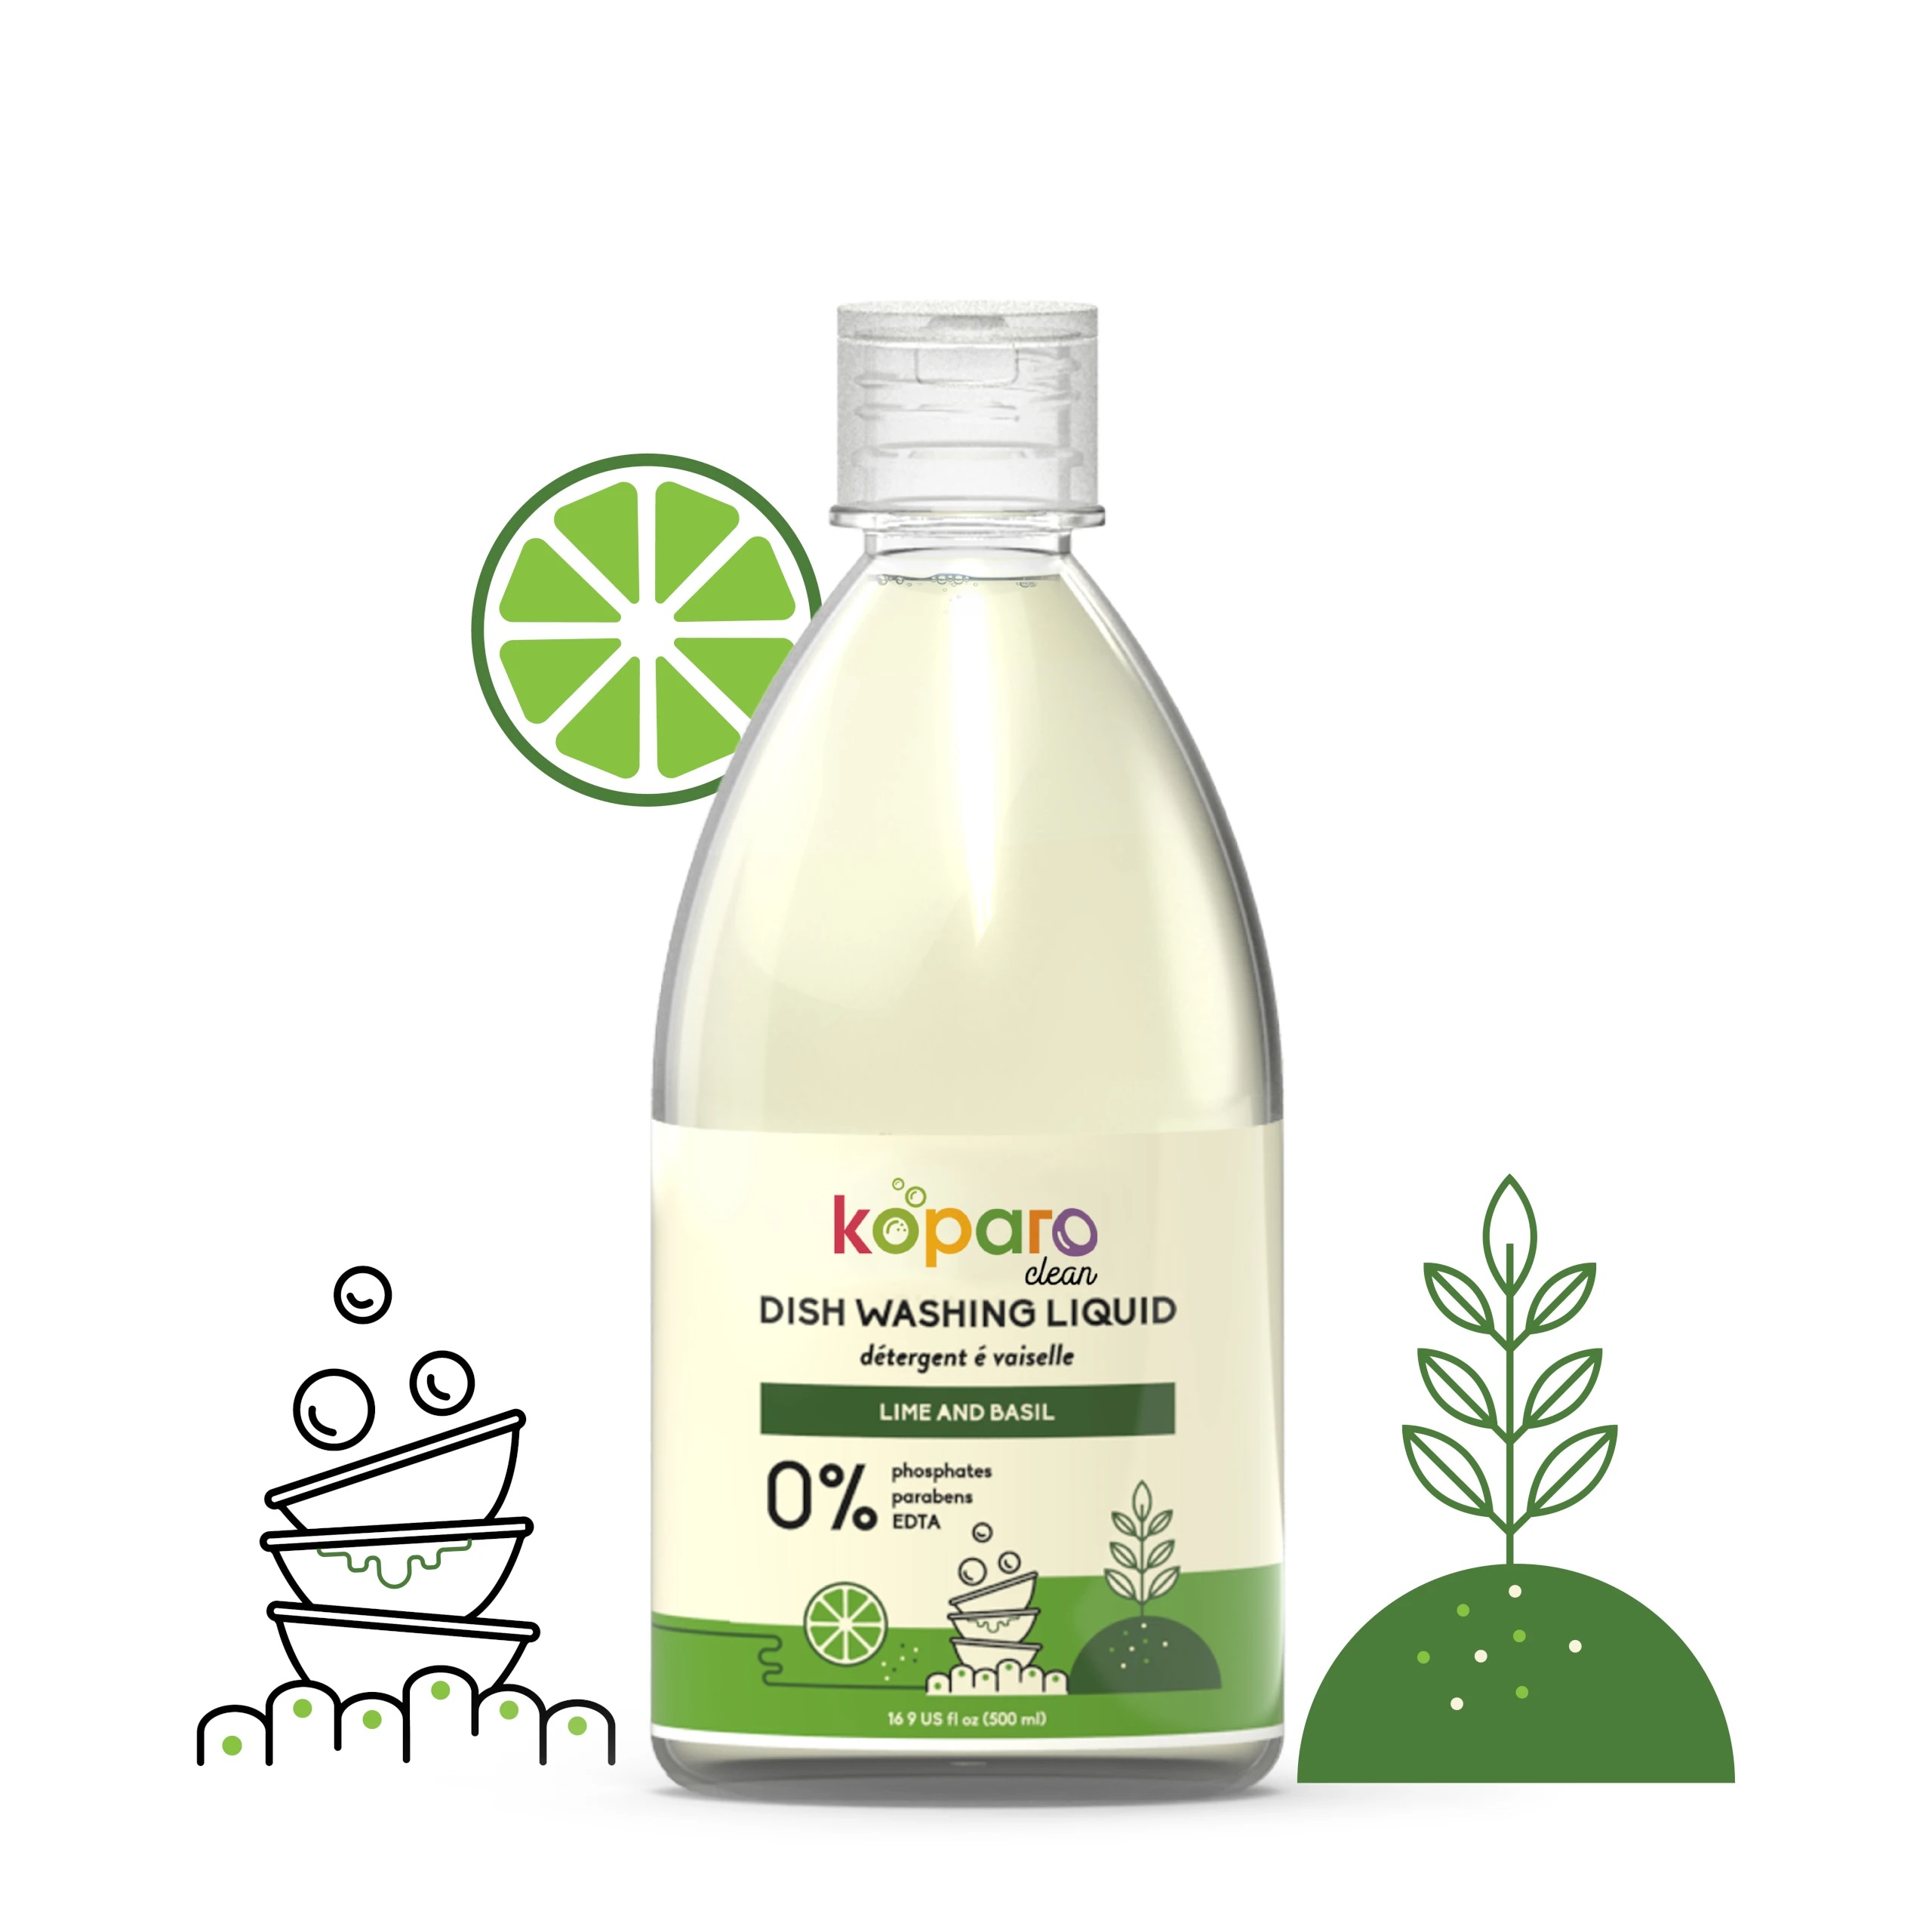 Koparo Clean Shopping | Online Store